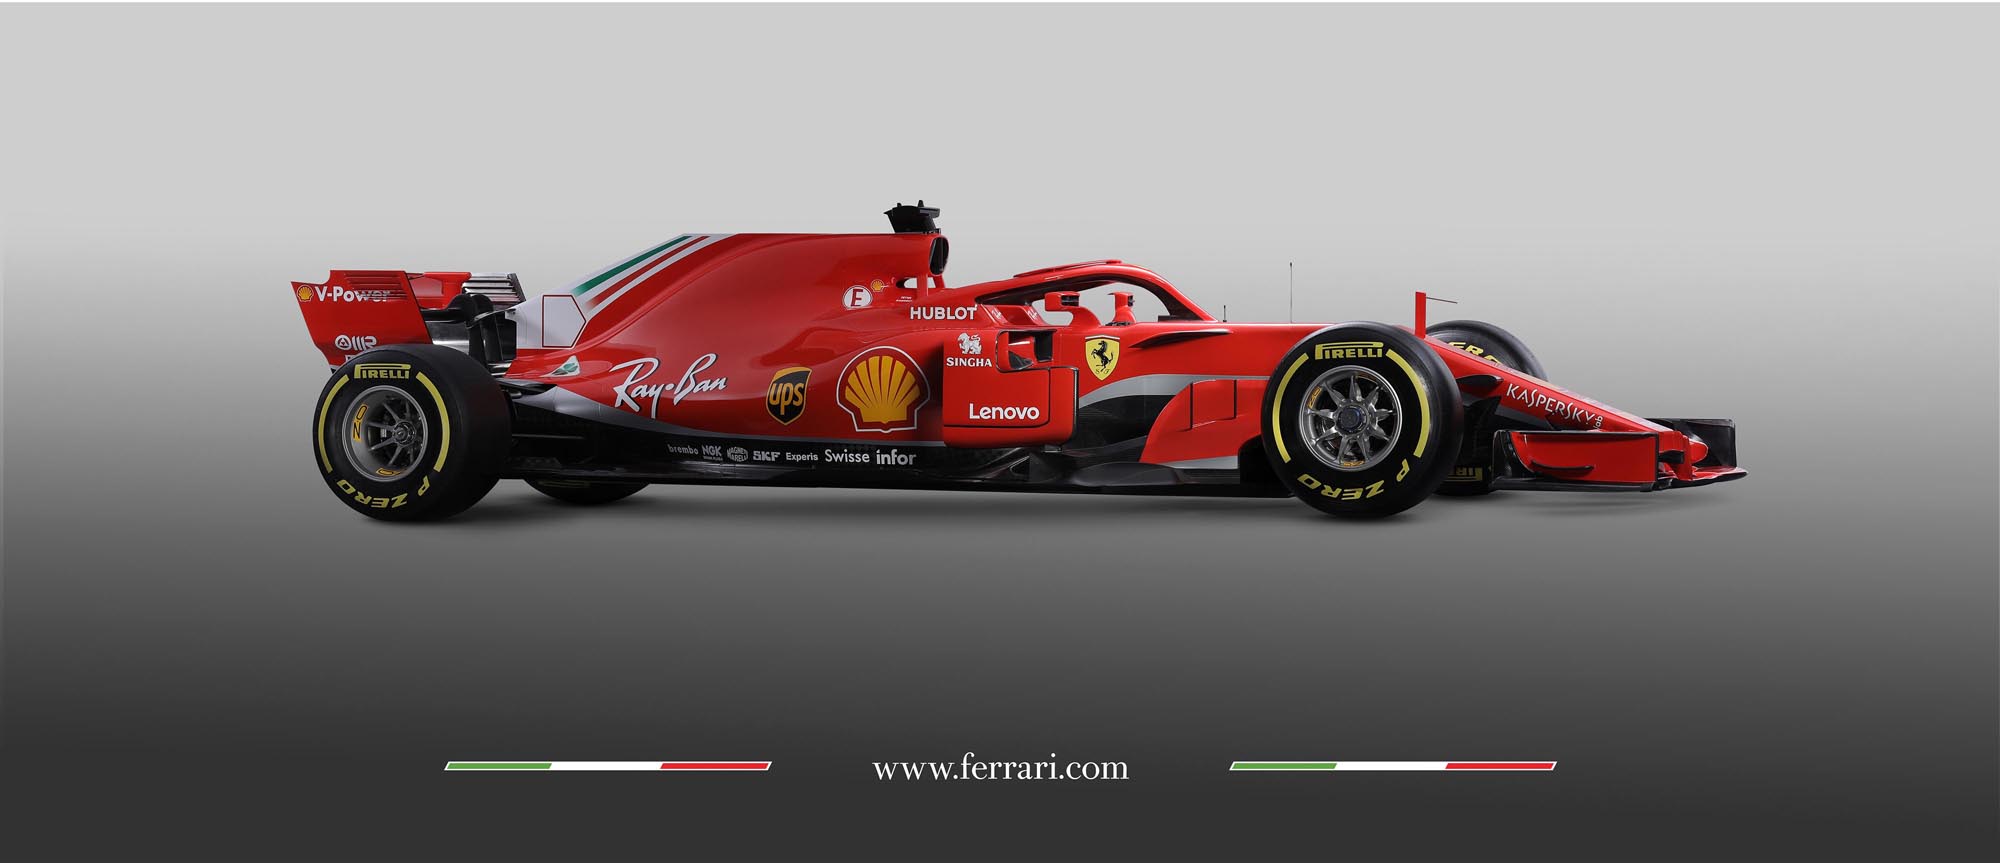 En vacker helröd Scuderia Ferrari SF71H